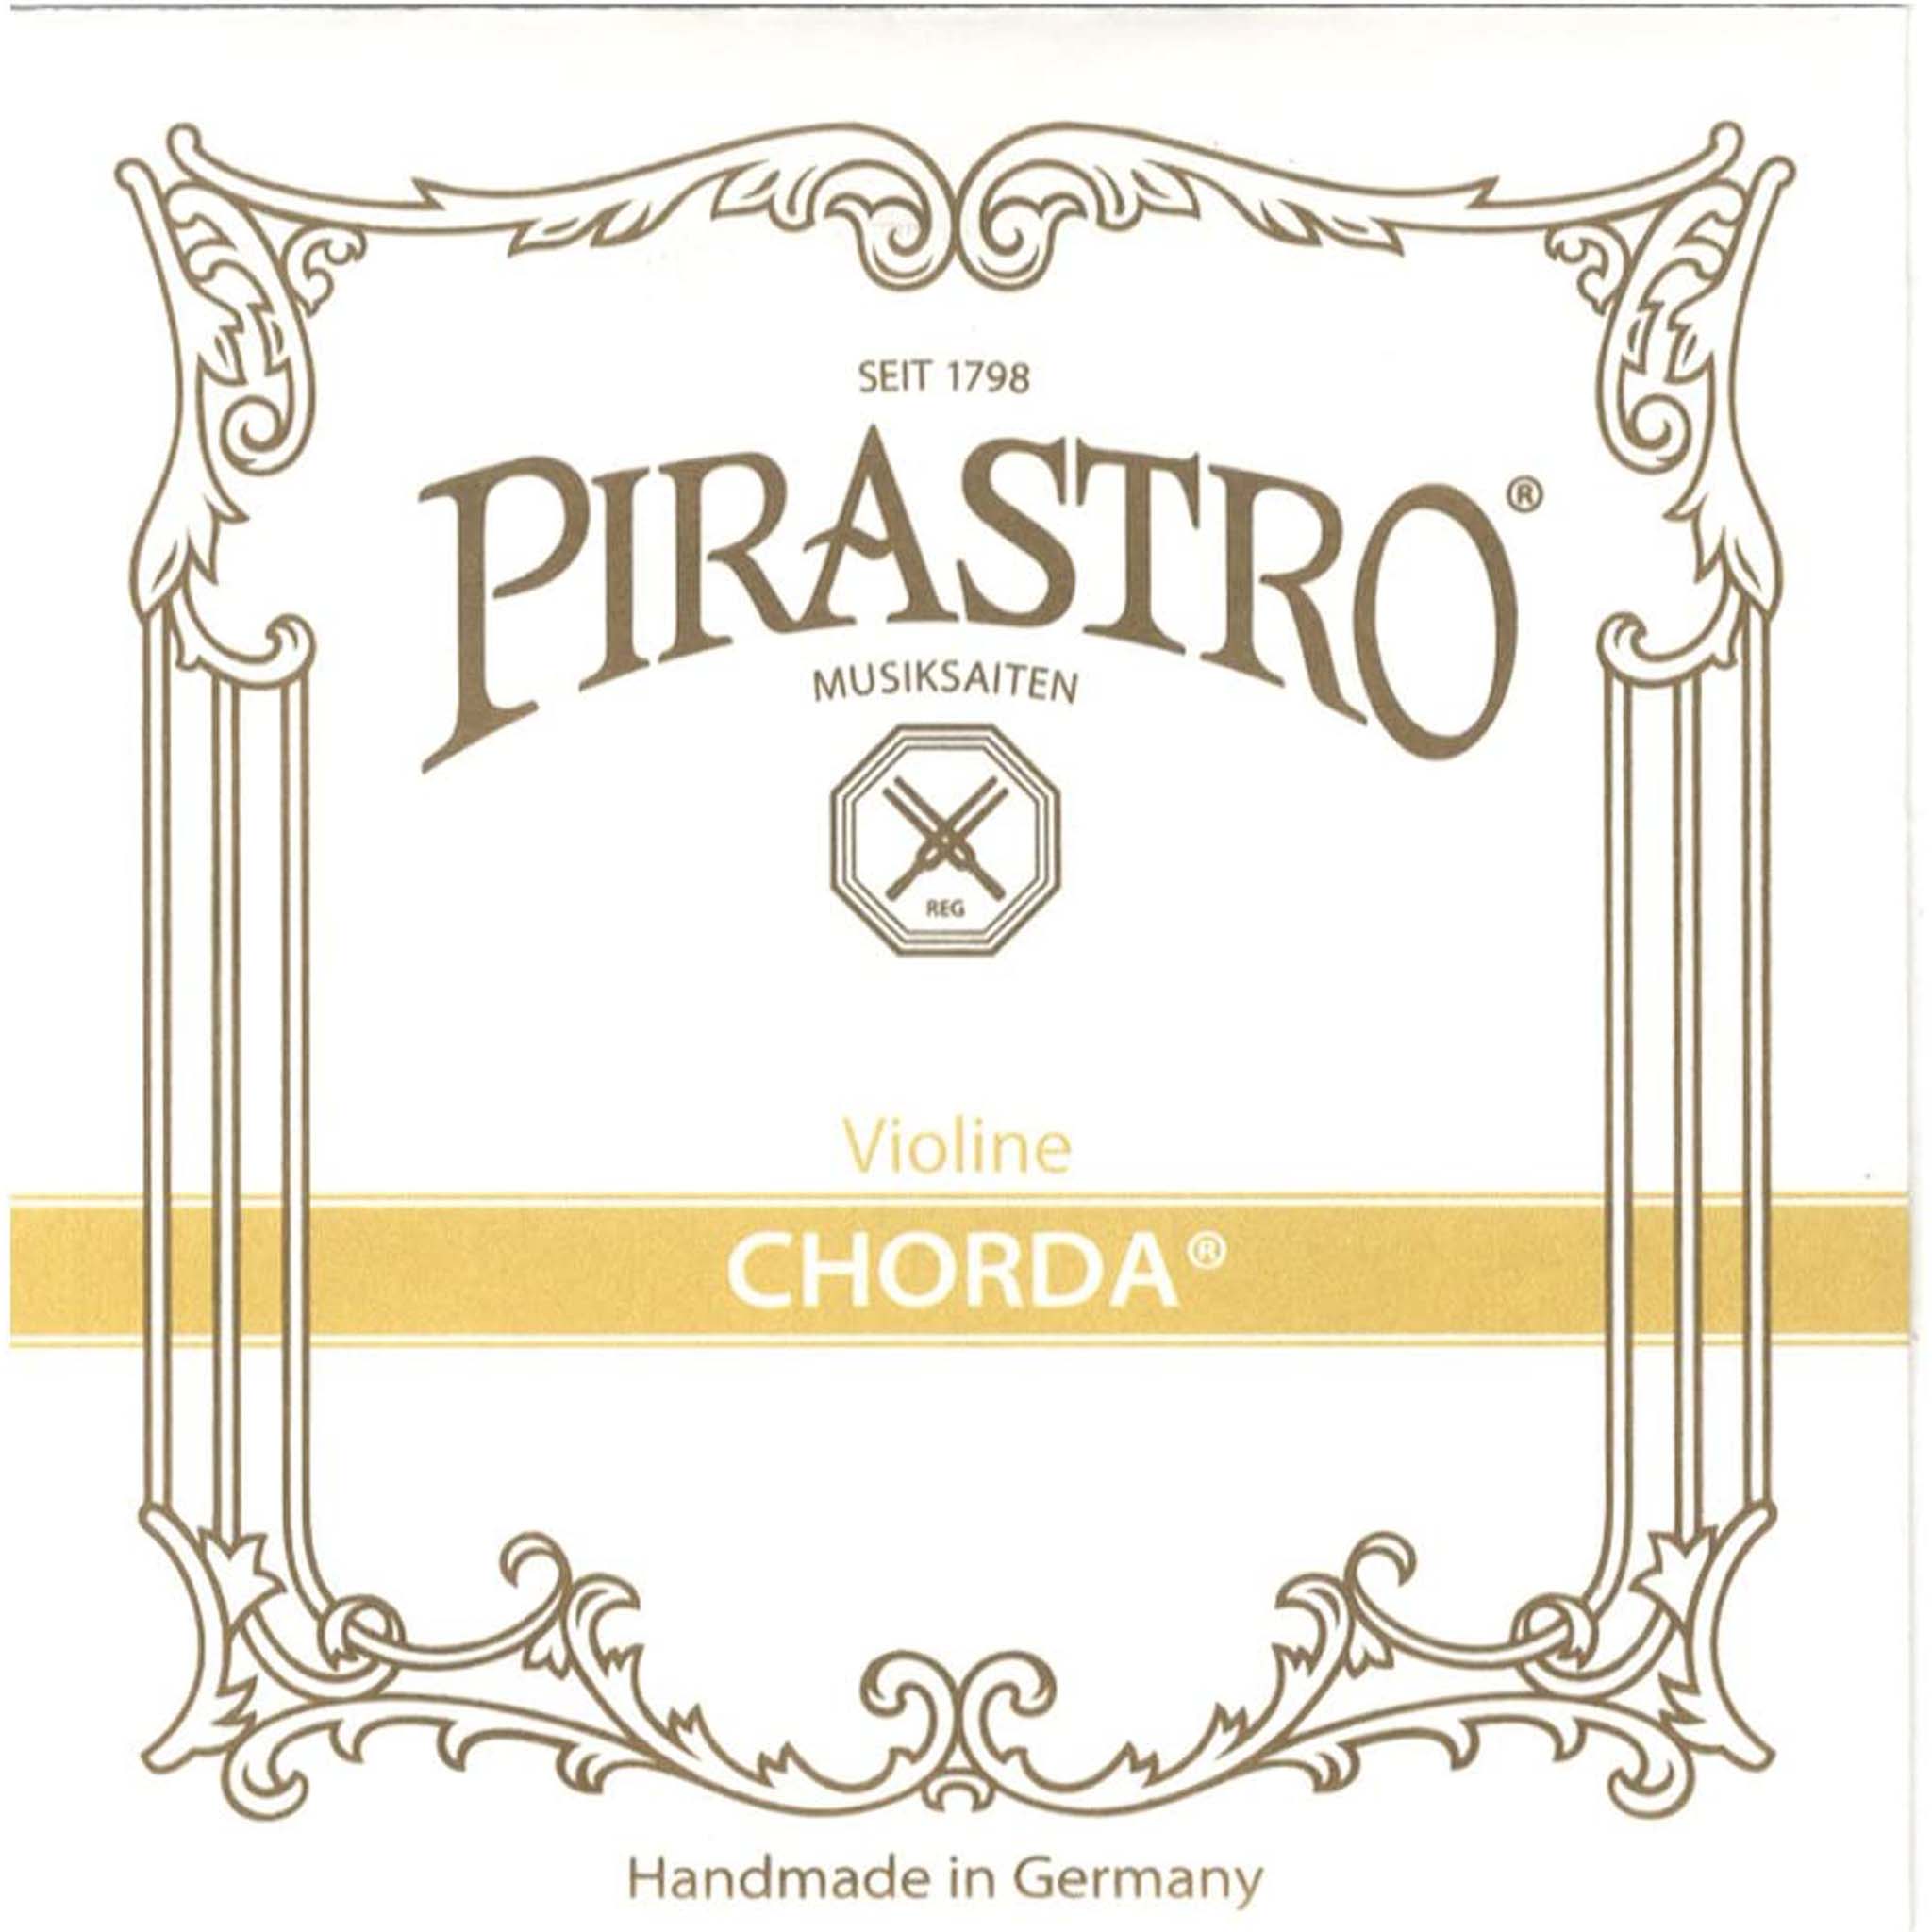 Pirastro Chorda Violin String Set - Gut